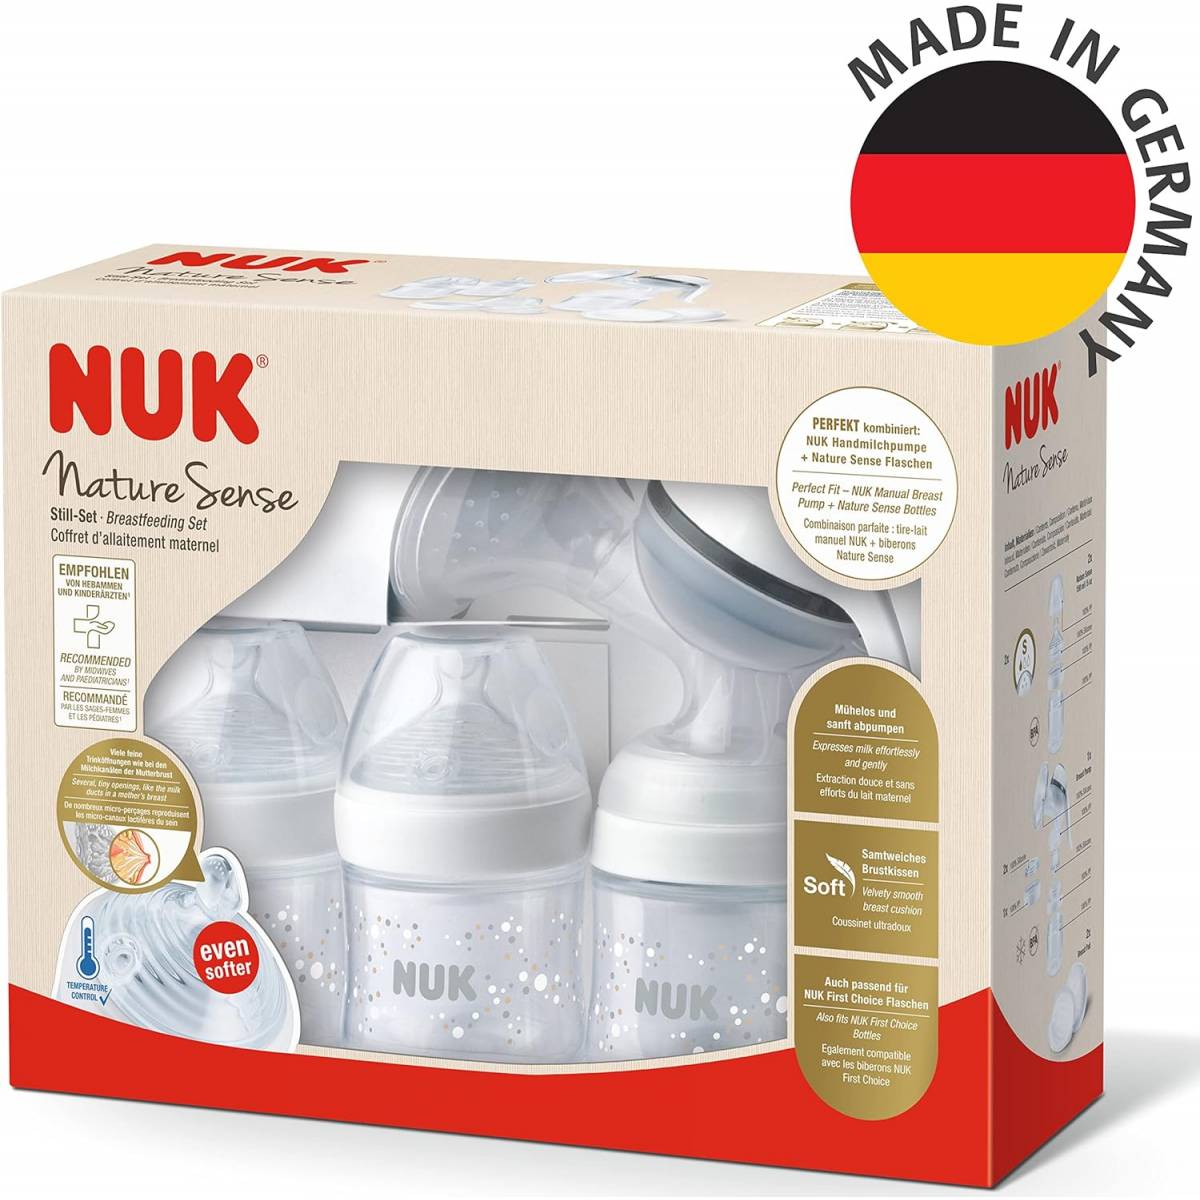 NUK Nature Sense Handmilchpumpe Still-Set mit Handmilchpumpe